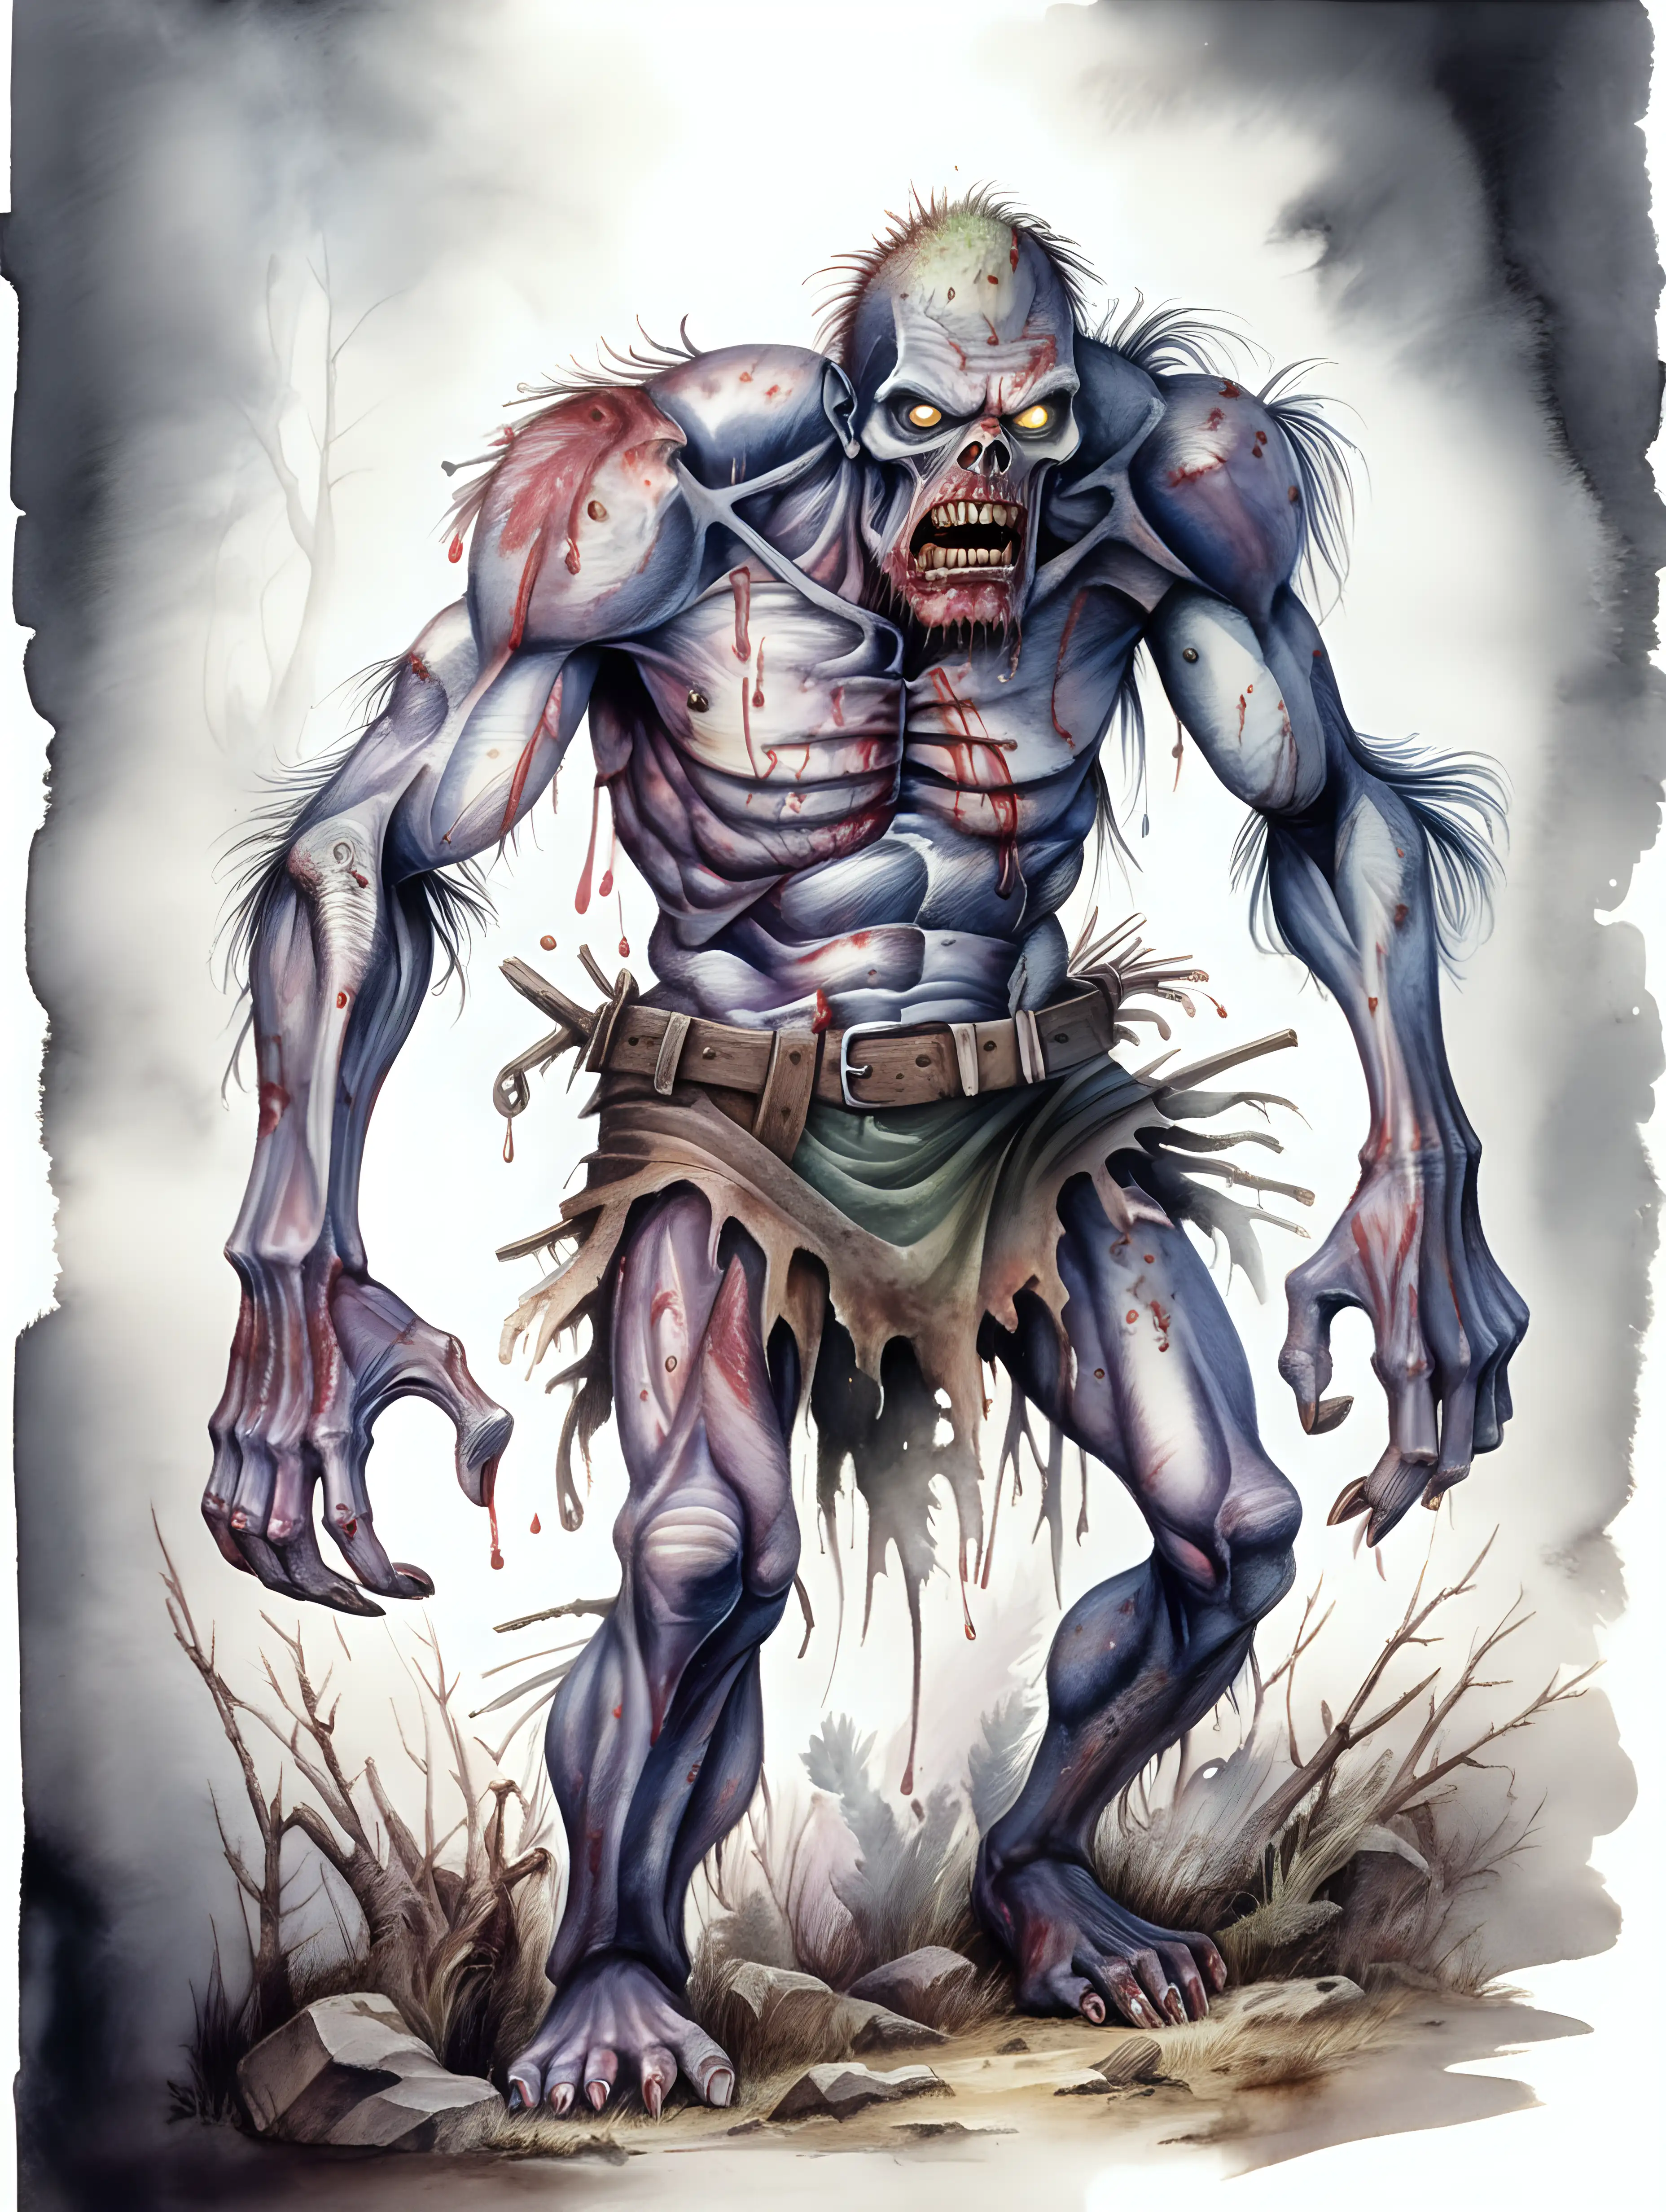 Majestic Zombie in Dark Watercolor Illustration